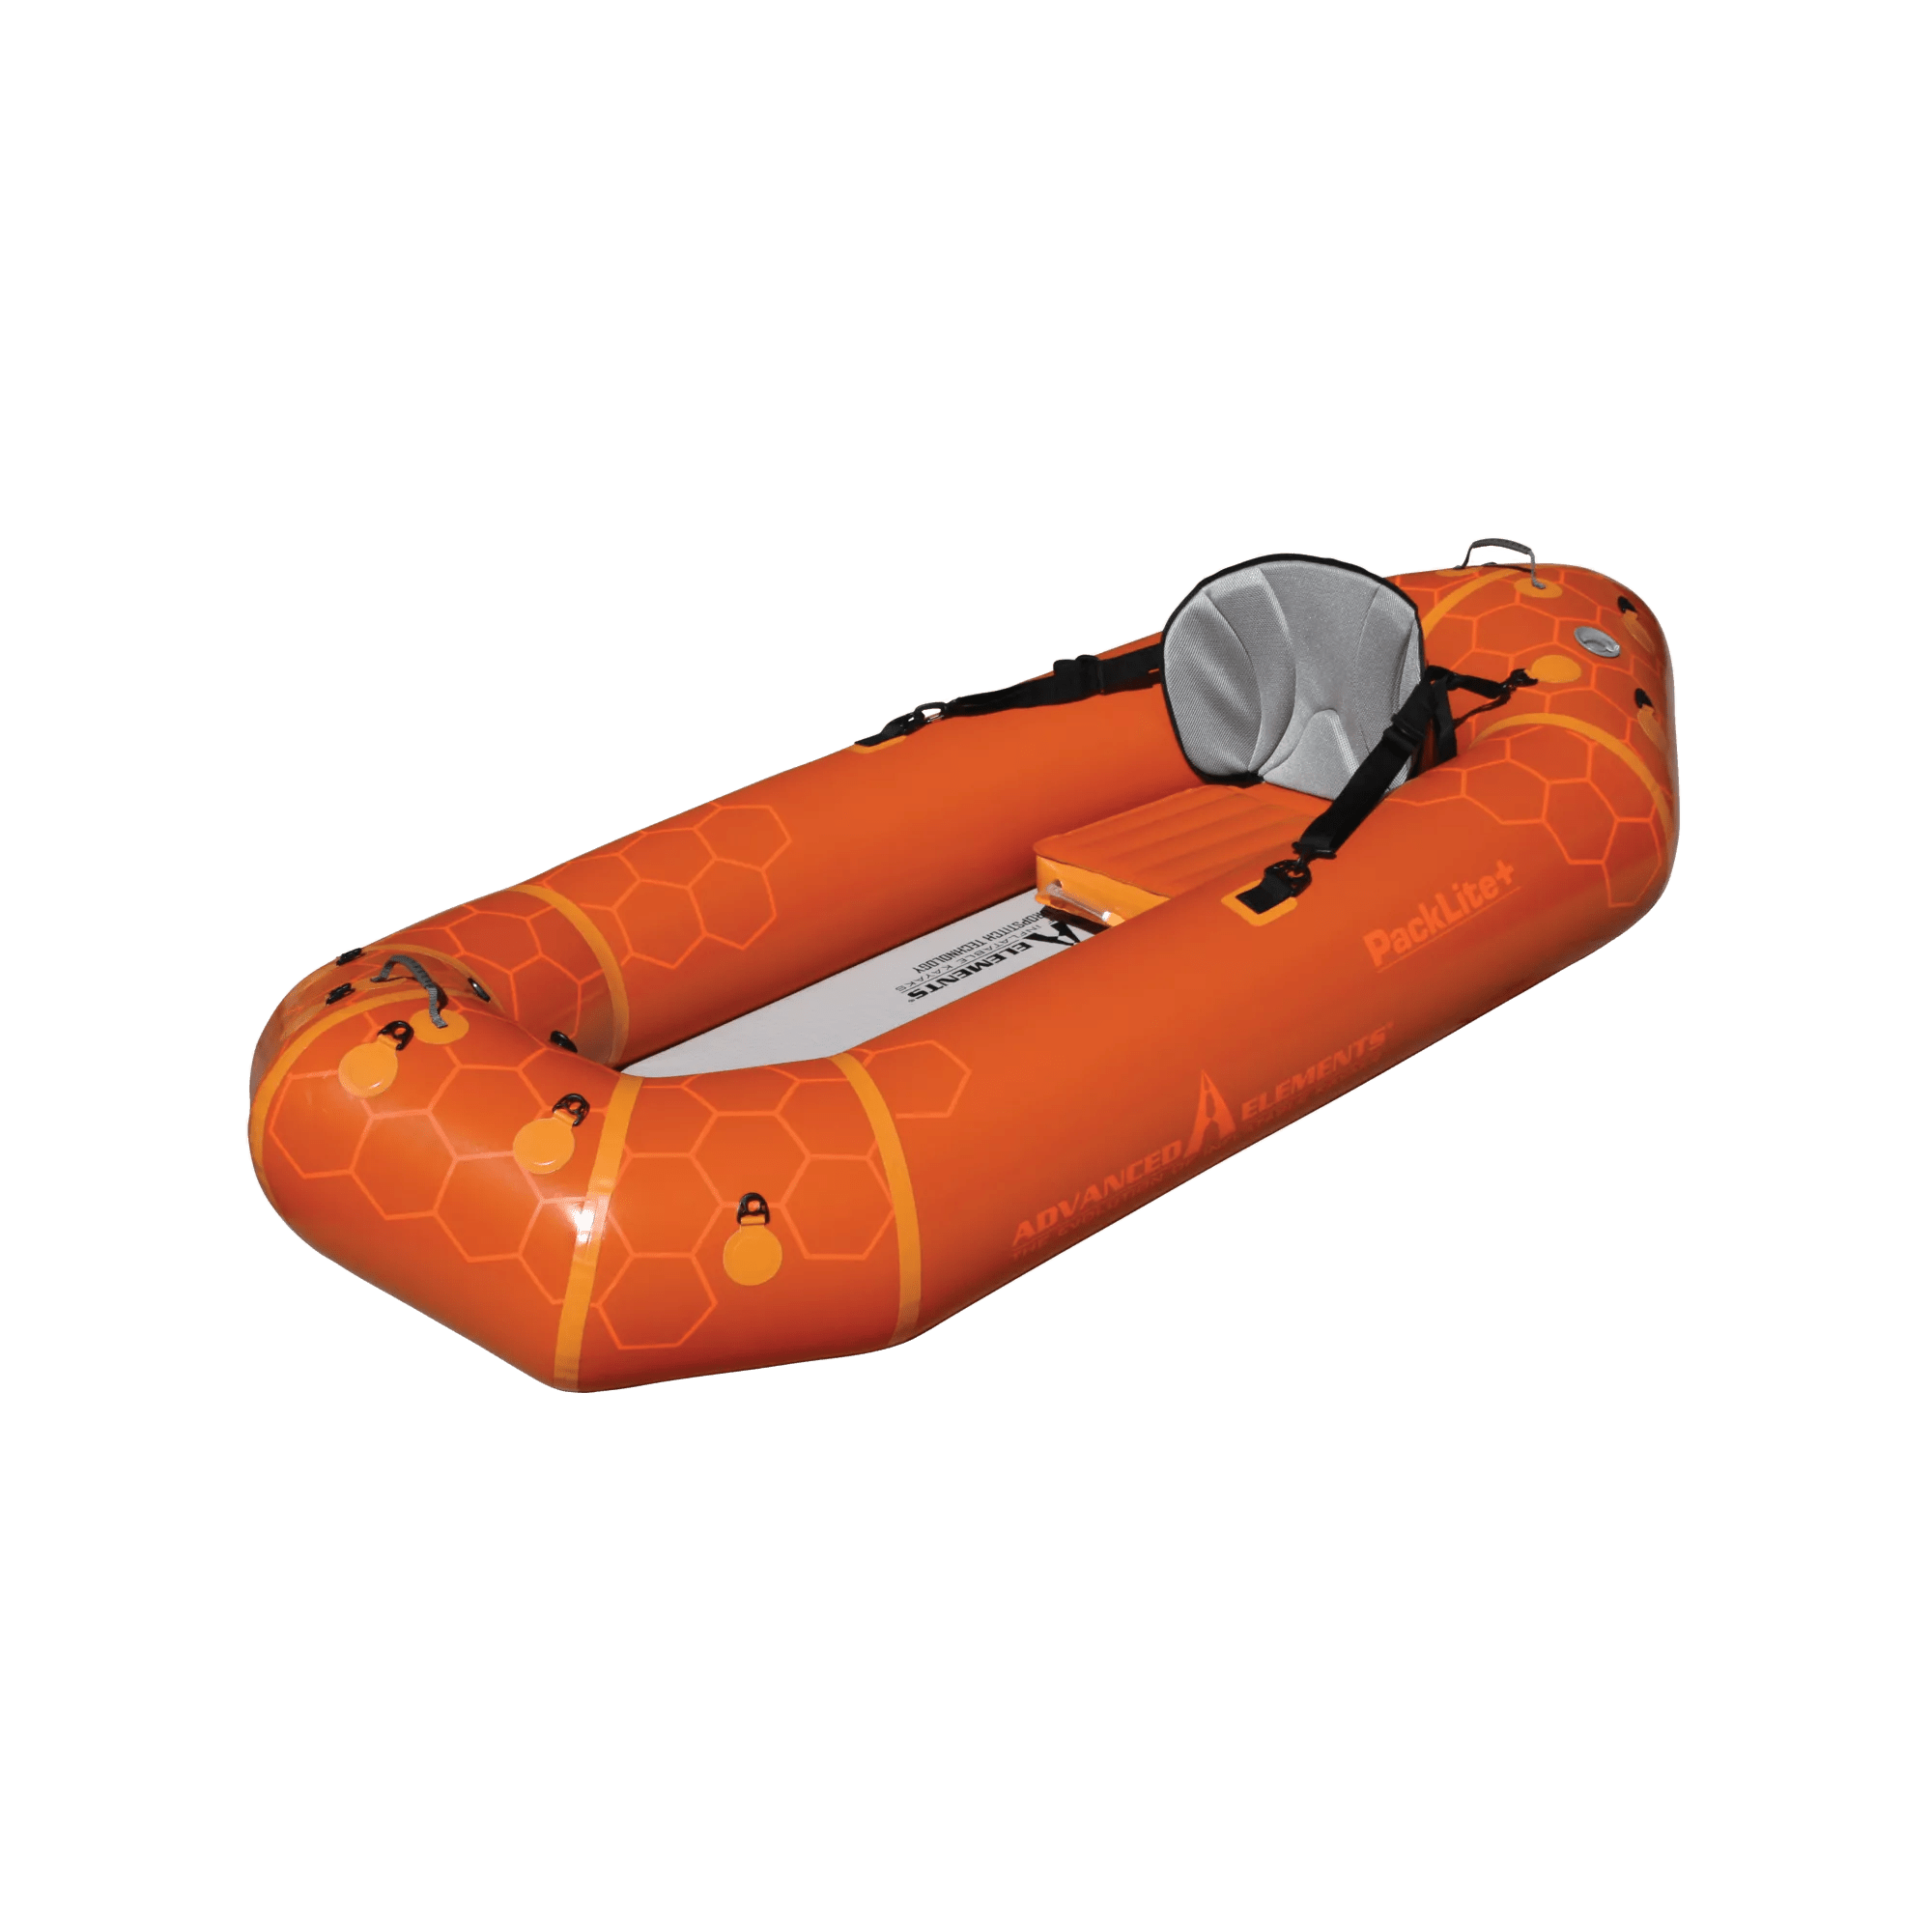 ADVANCED ELEMENTS - Kayak-radeau PackLite+ - White - AE3037 - ISO 